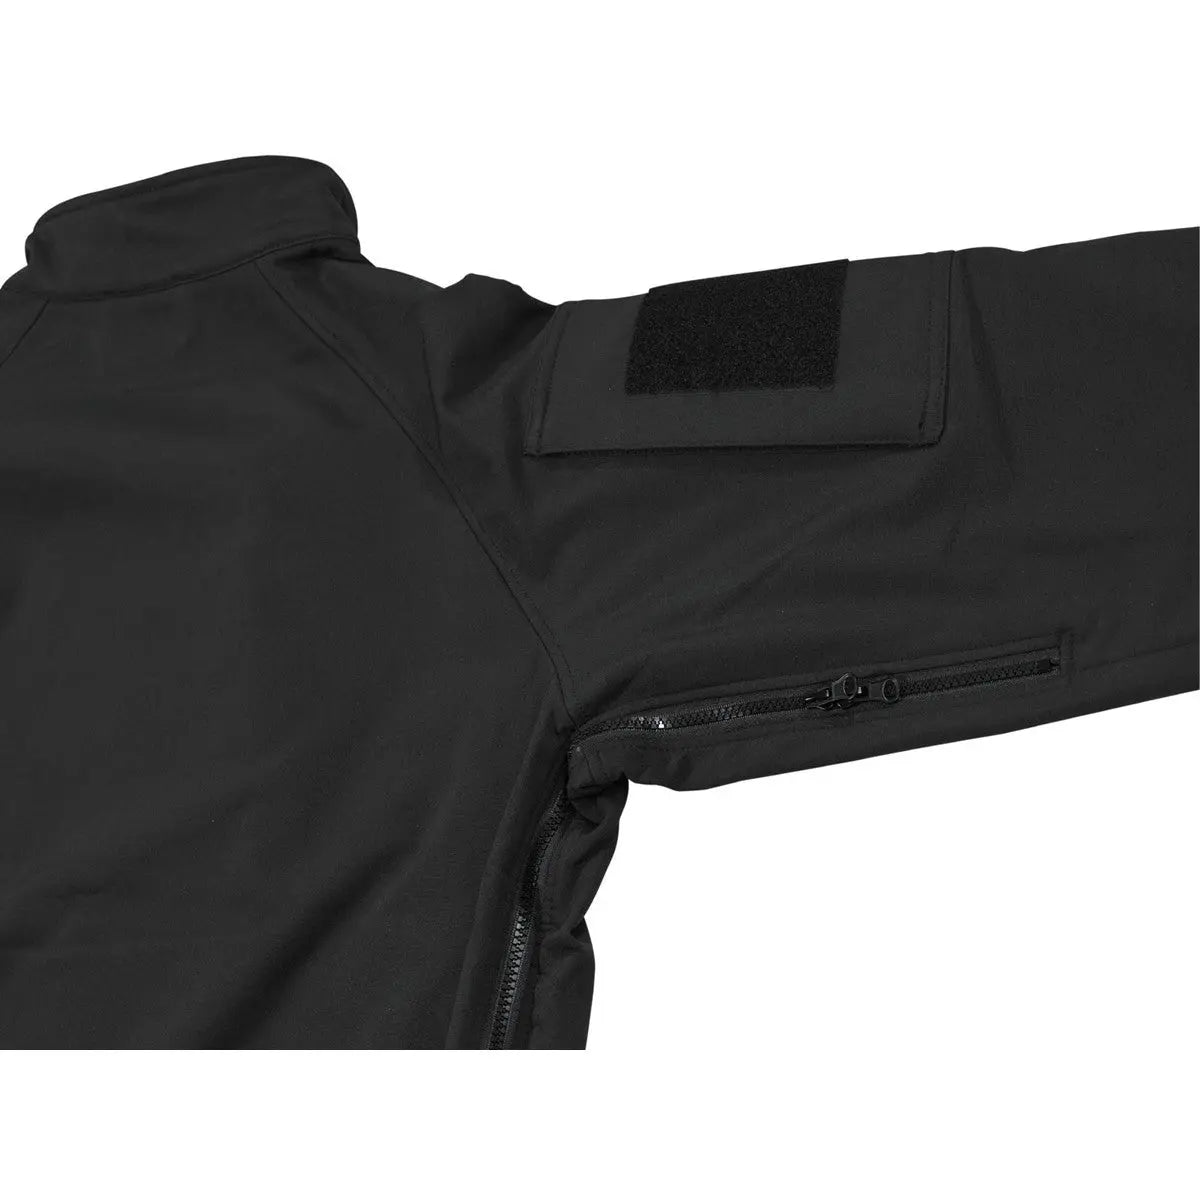 Soft Shell Jacket, "Australia", black NSO Gear